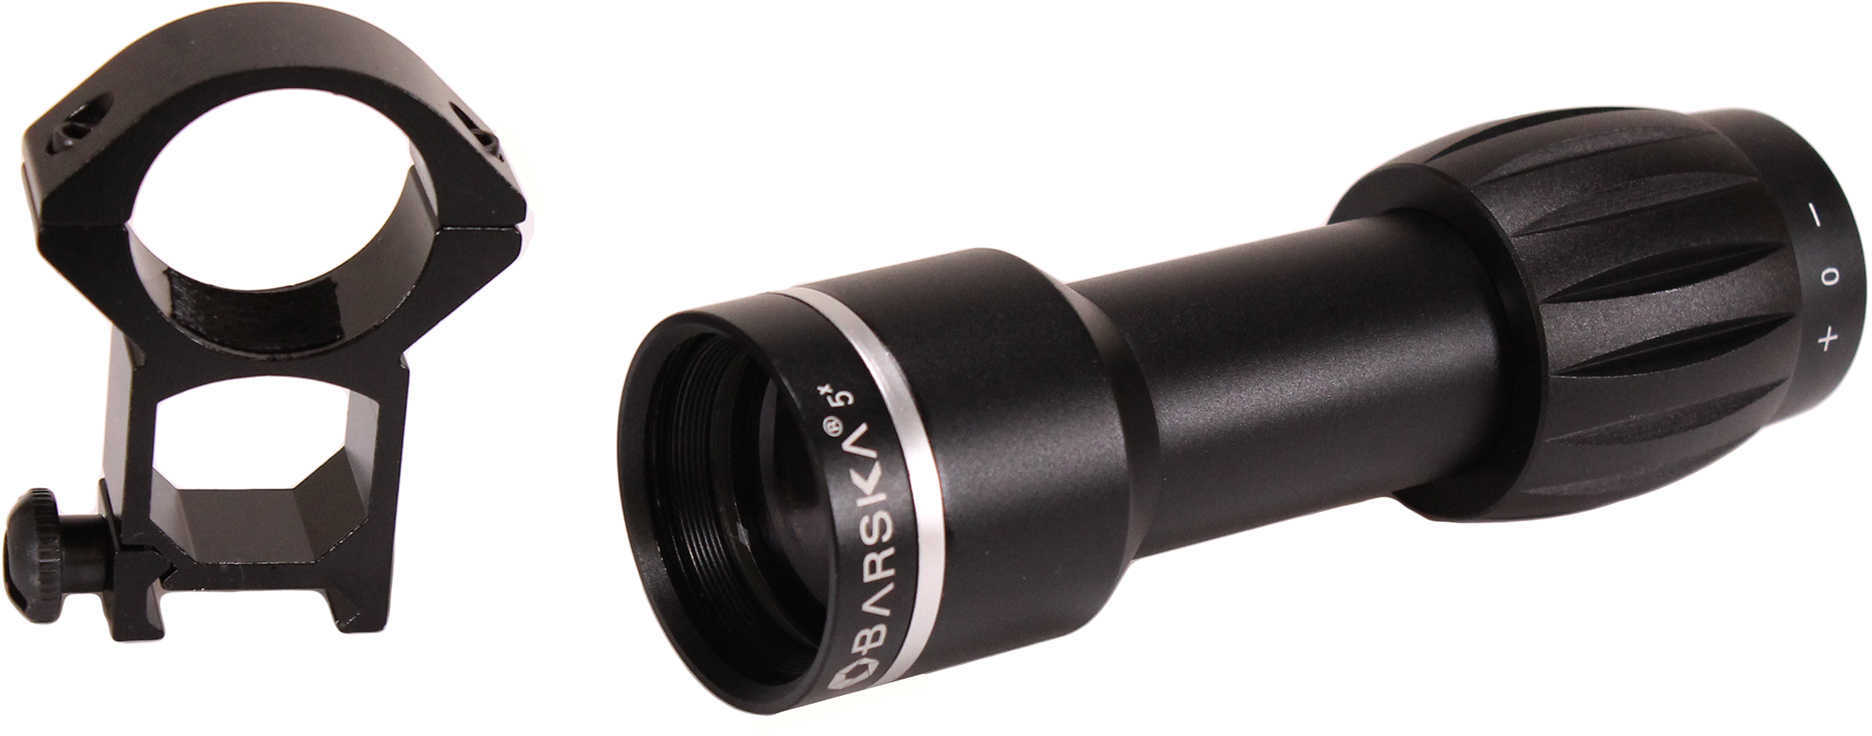 Barska Optics 5X Magnifier W/ Extra High Ring AW11654